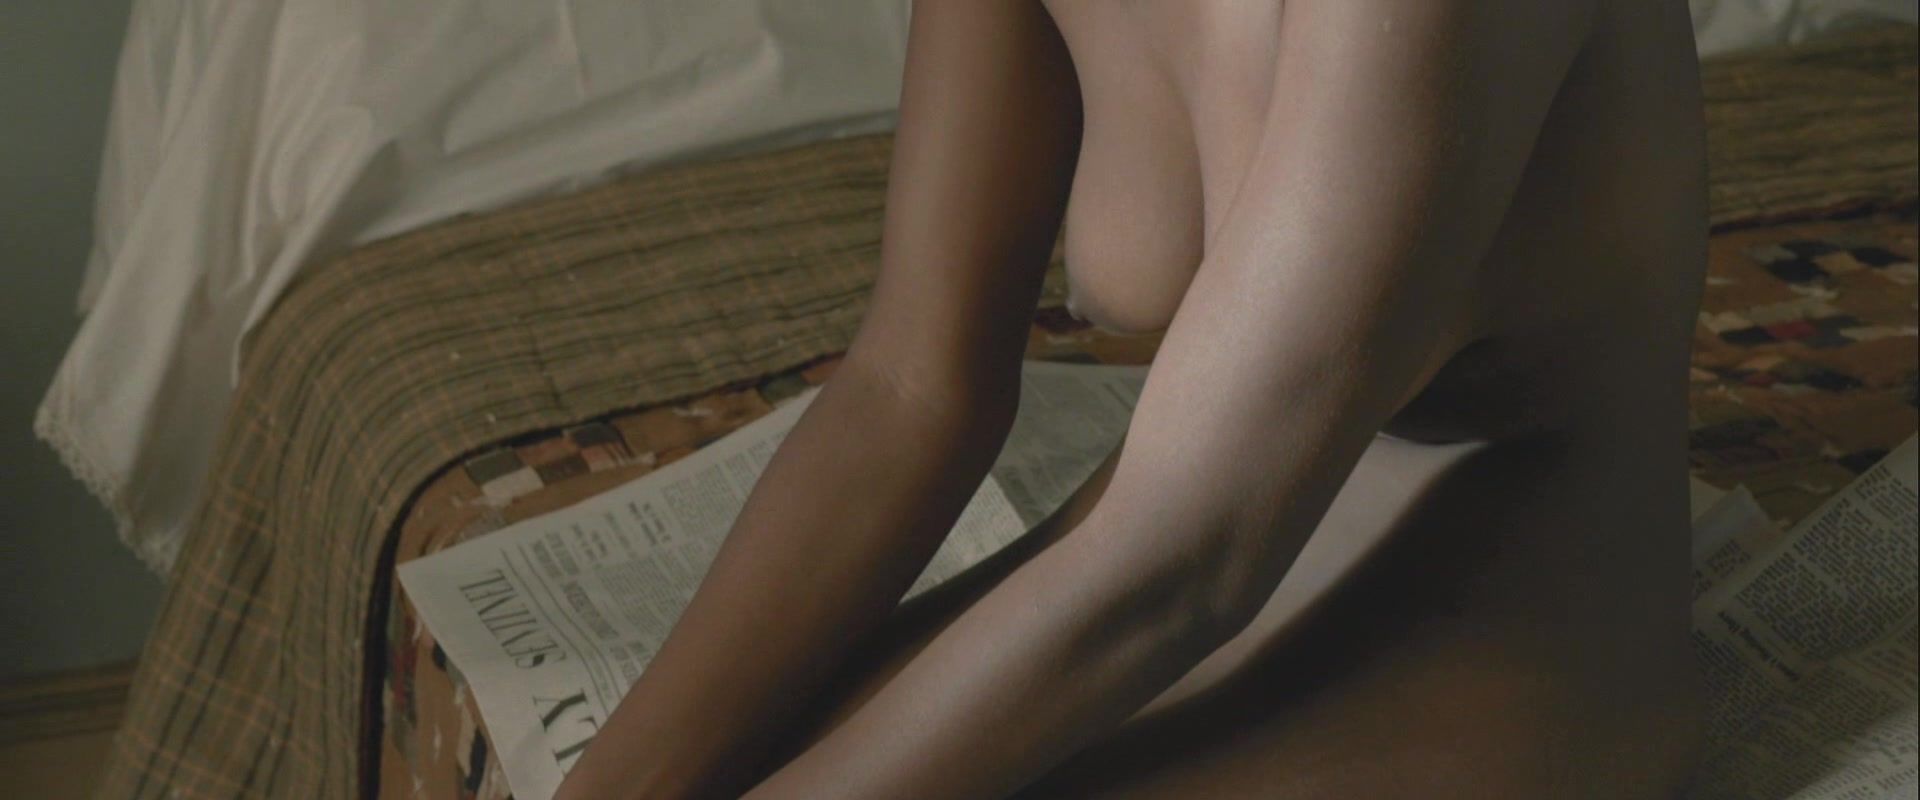 DaPink Jessica Chastain, Mia Wasikowska - Lawless (2012) Flashing